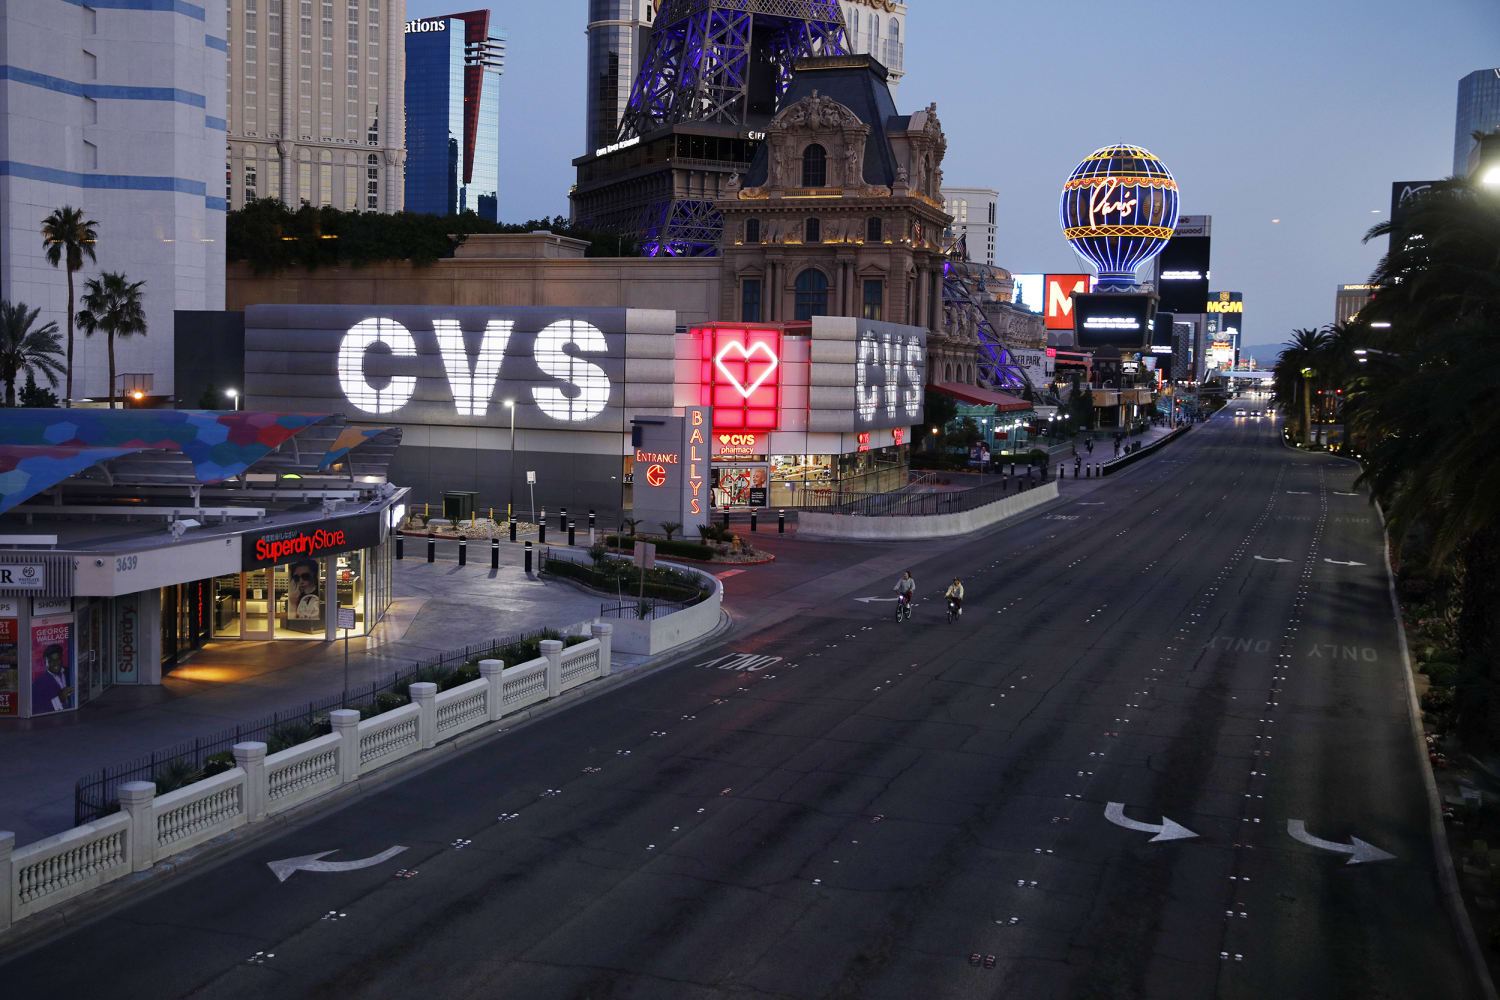 PHOTOS: Here's the Las Vegas Strip during the COVID-19 shutdown